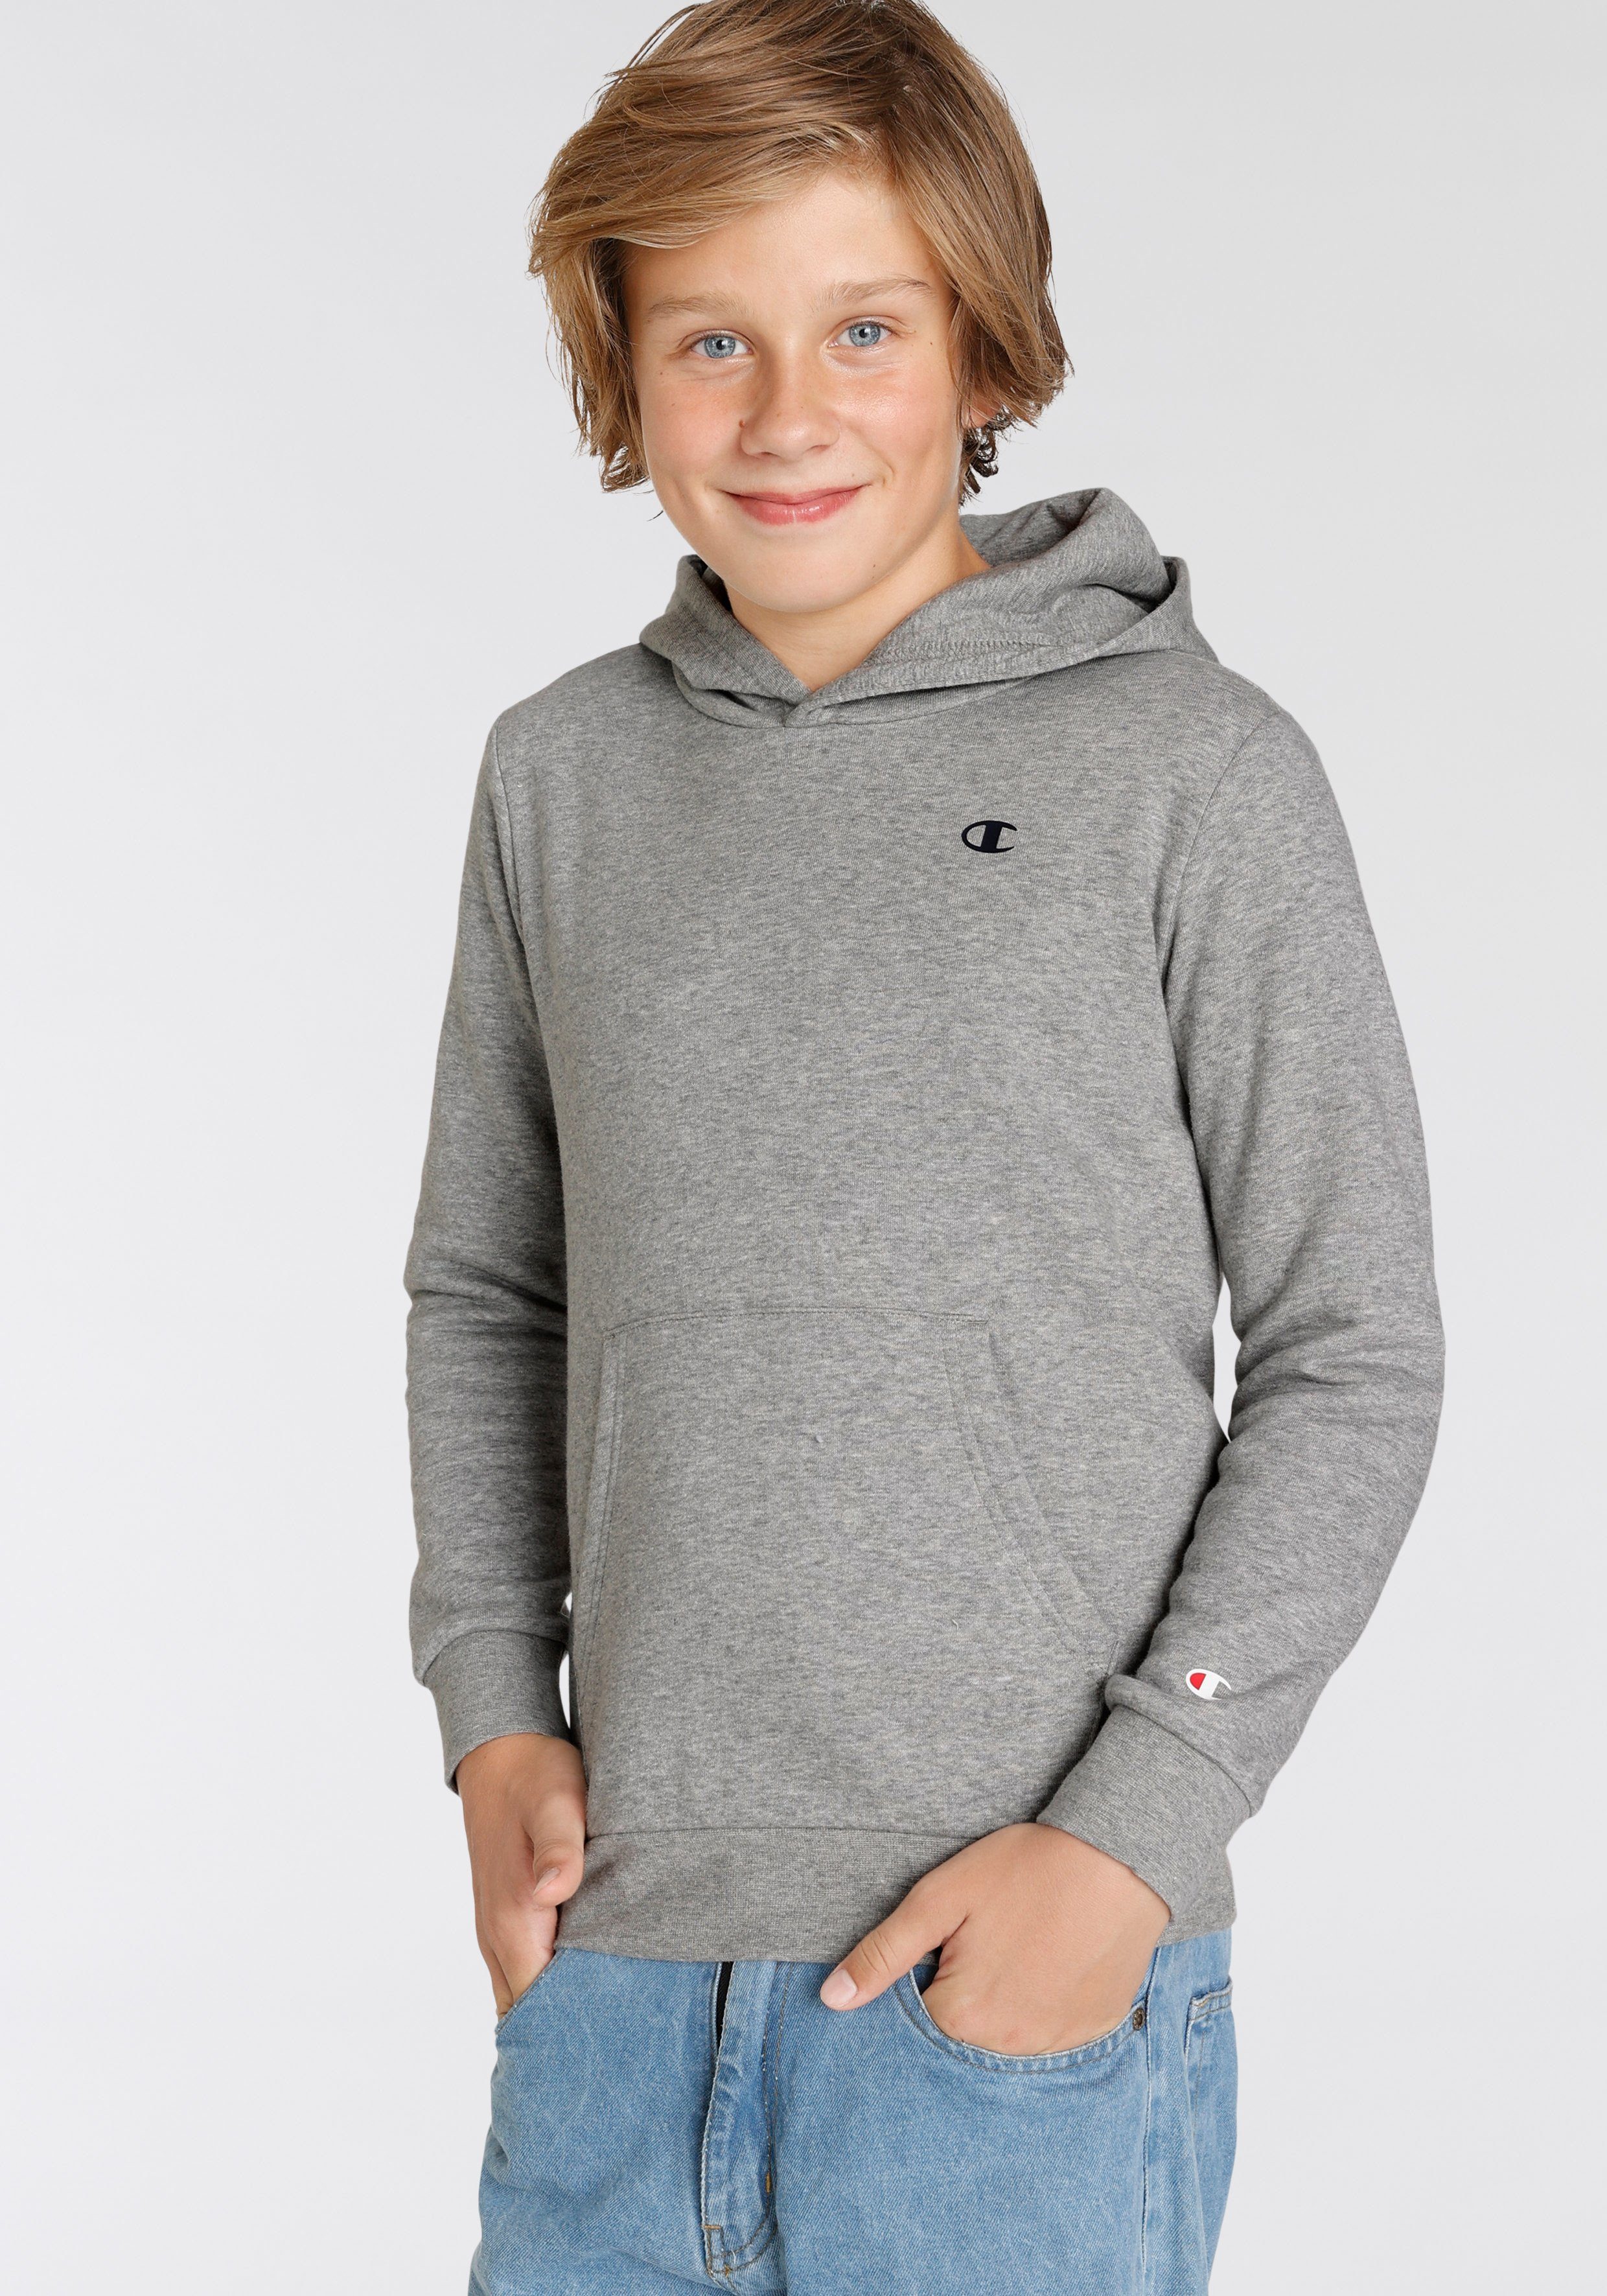 - Champion Basic Kinder grau Sweatshirt Sweatshirt für Hooded